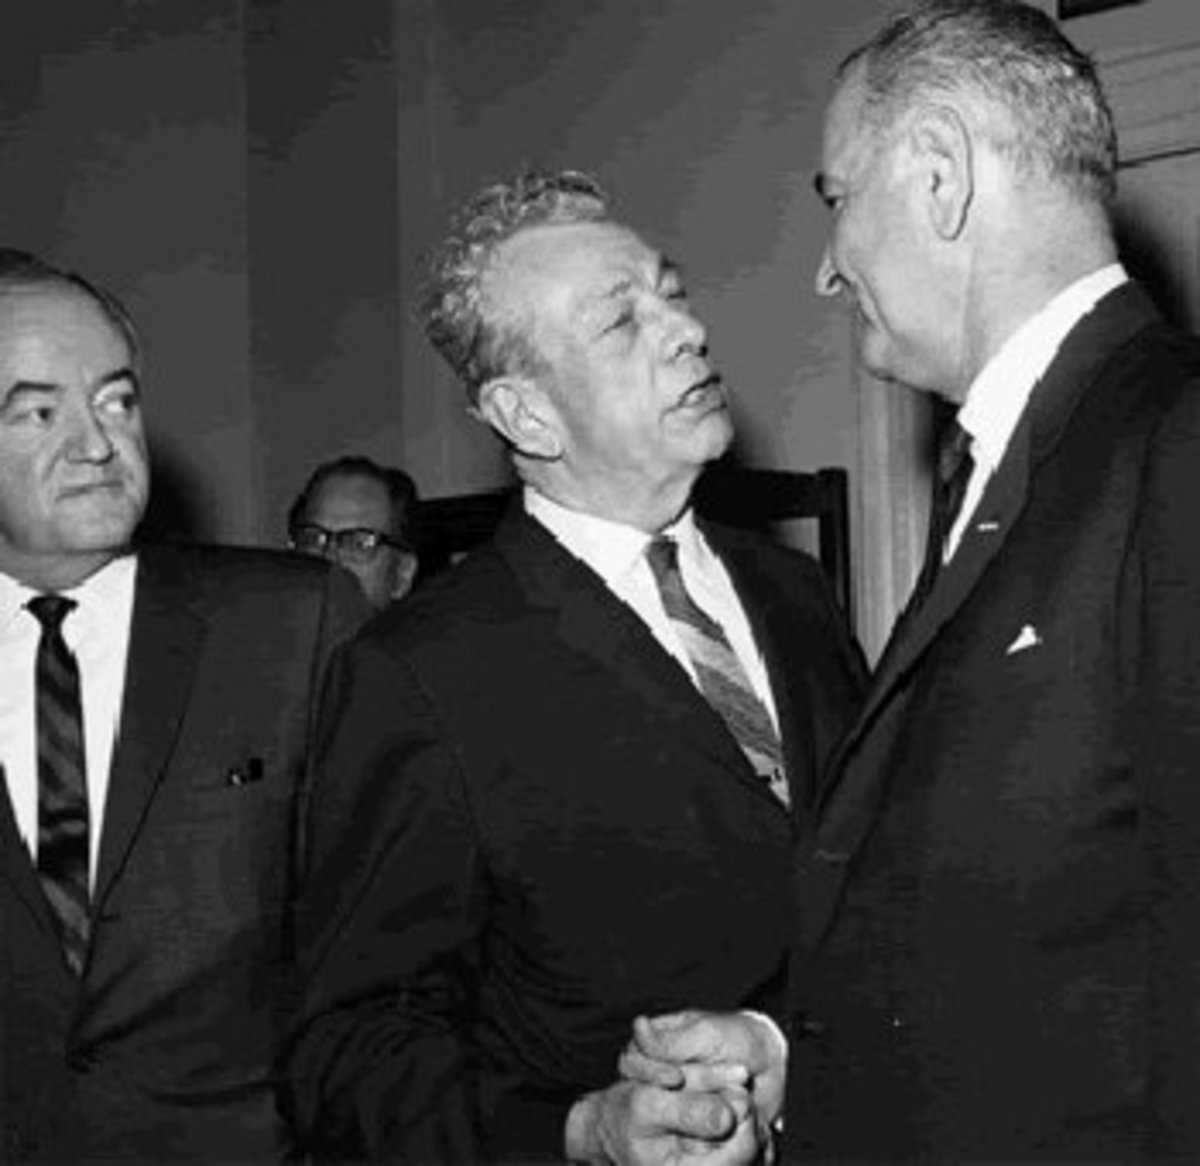 Democrats and Republicans working together: Hubert Humphrey, Everett Dirksen, and Lyndon Johnson.